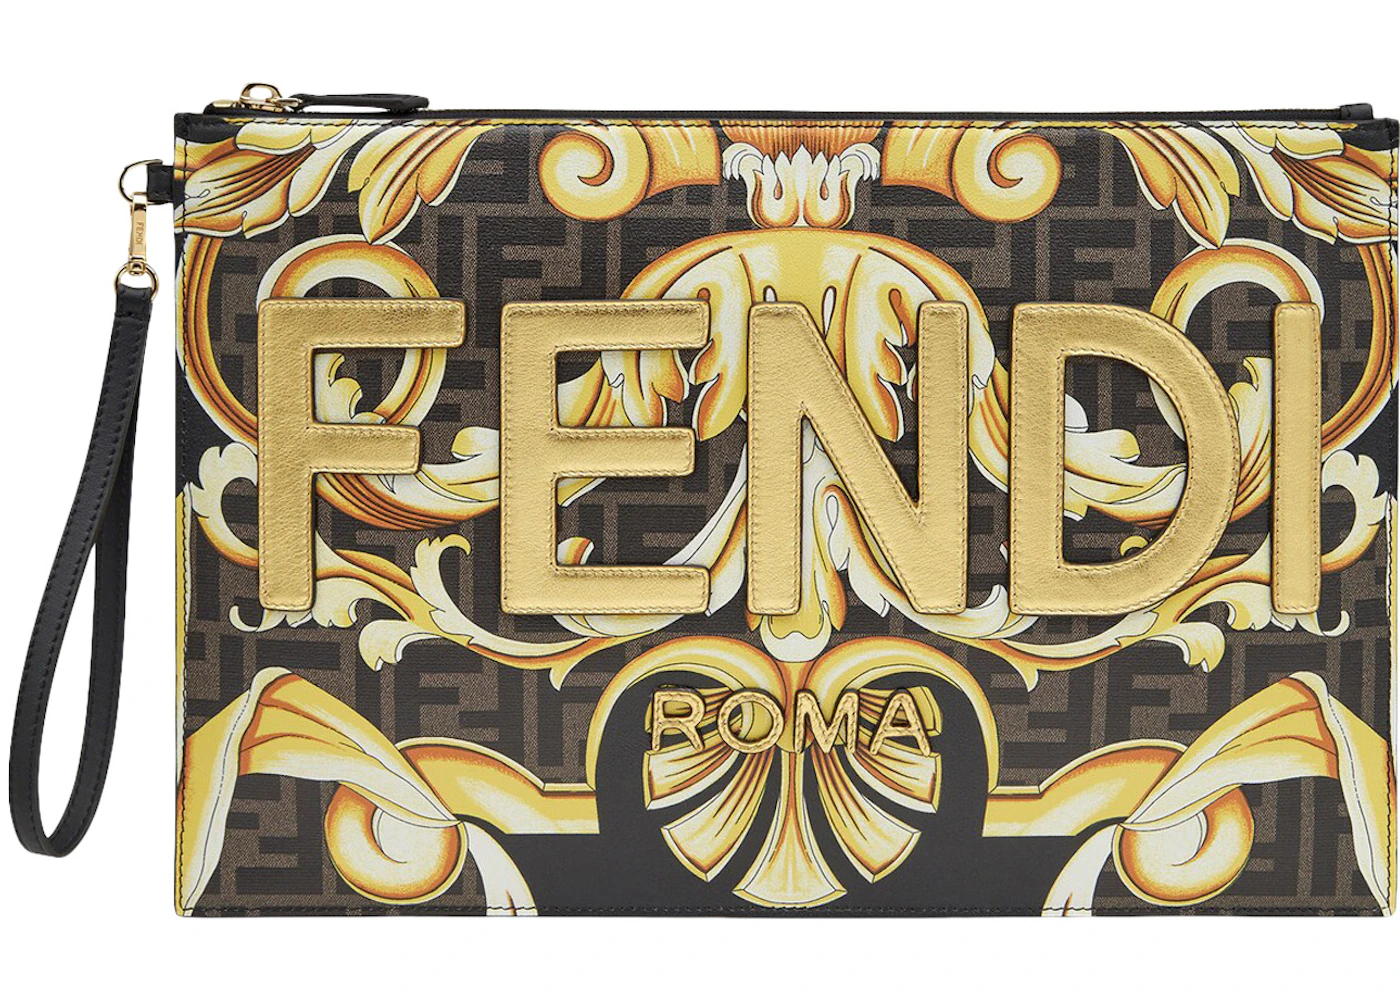 Fendi Fendace Large Flat Pouch Black/Multicolor in Calfskin